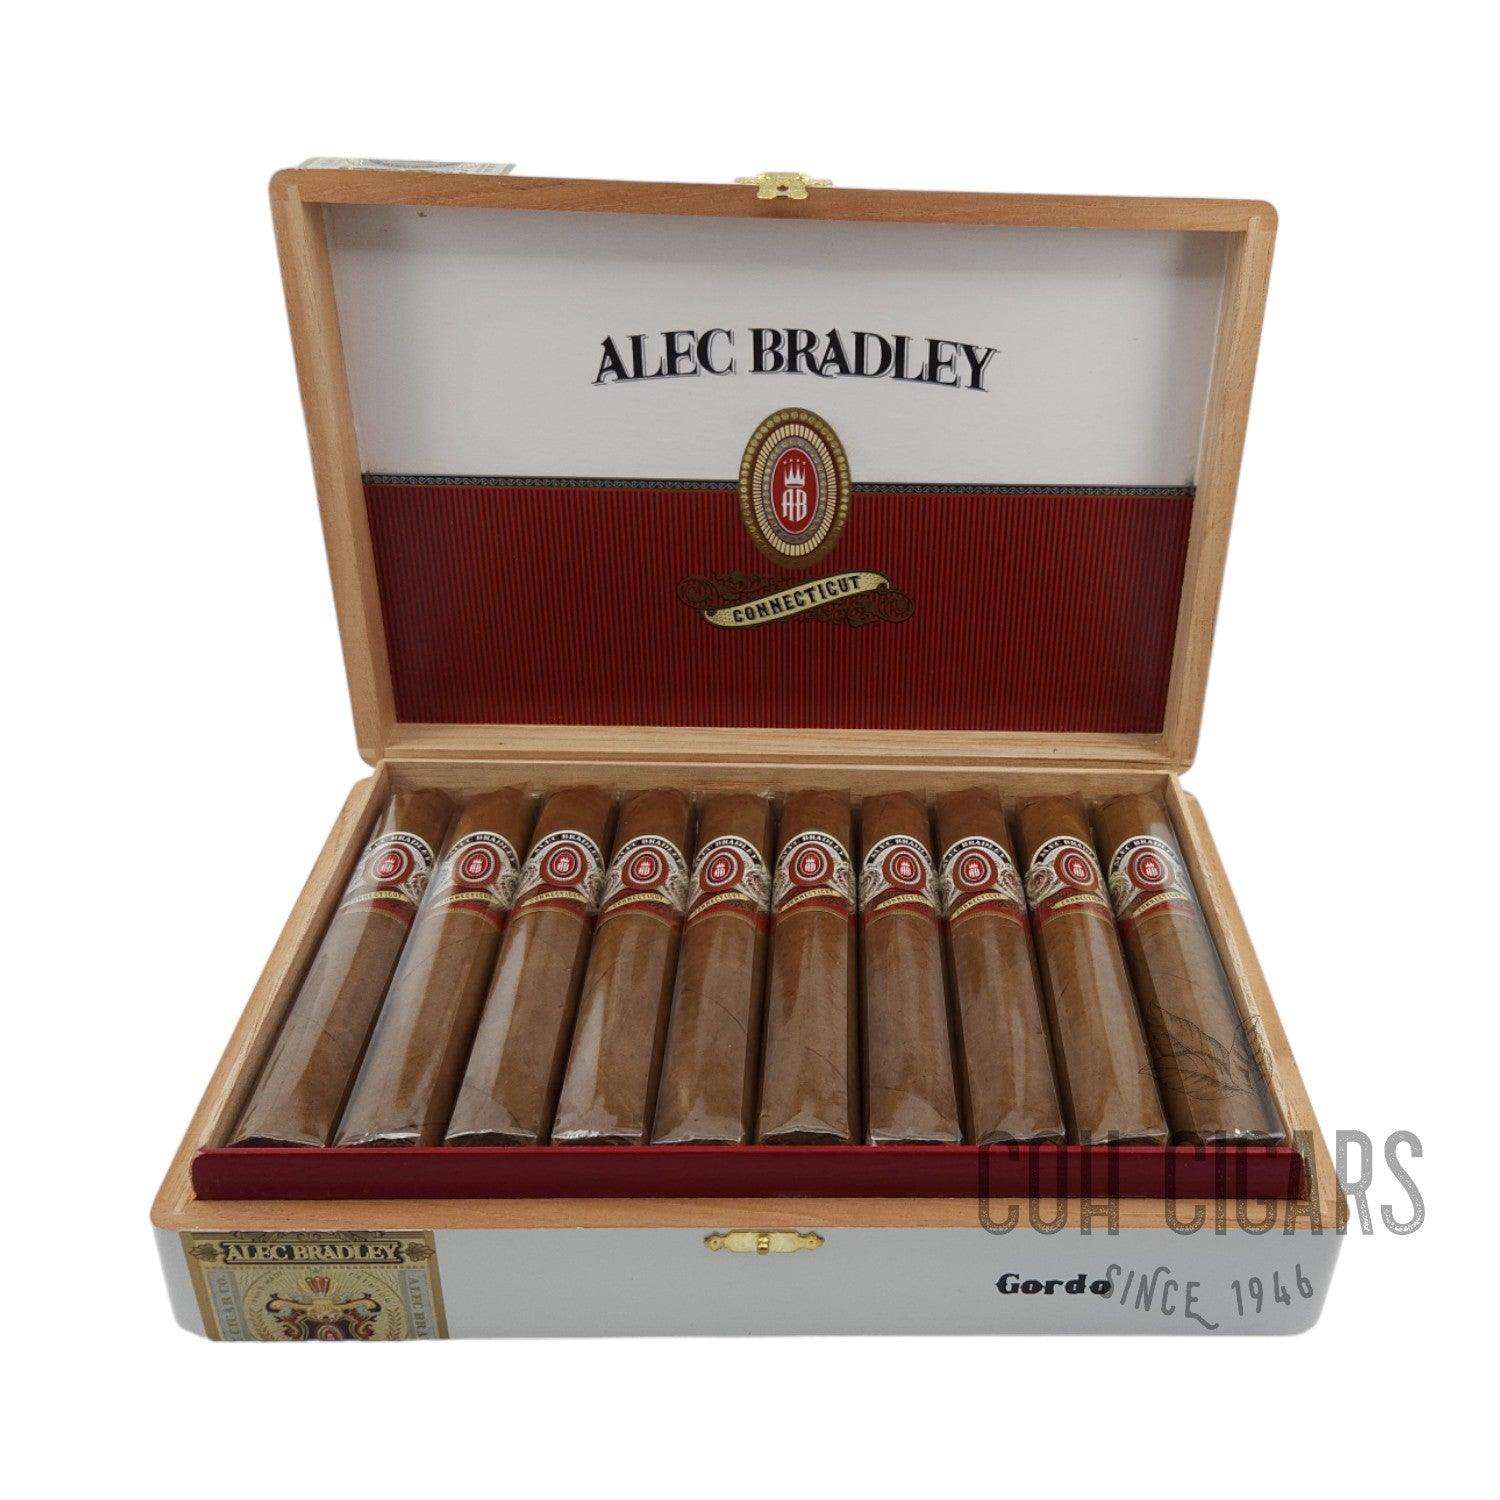 Alec Bradley Cigar | Connecticut Gordo | Box 20 - hk.cohcigars